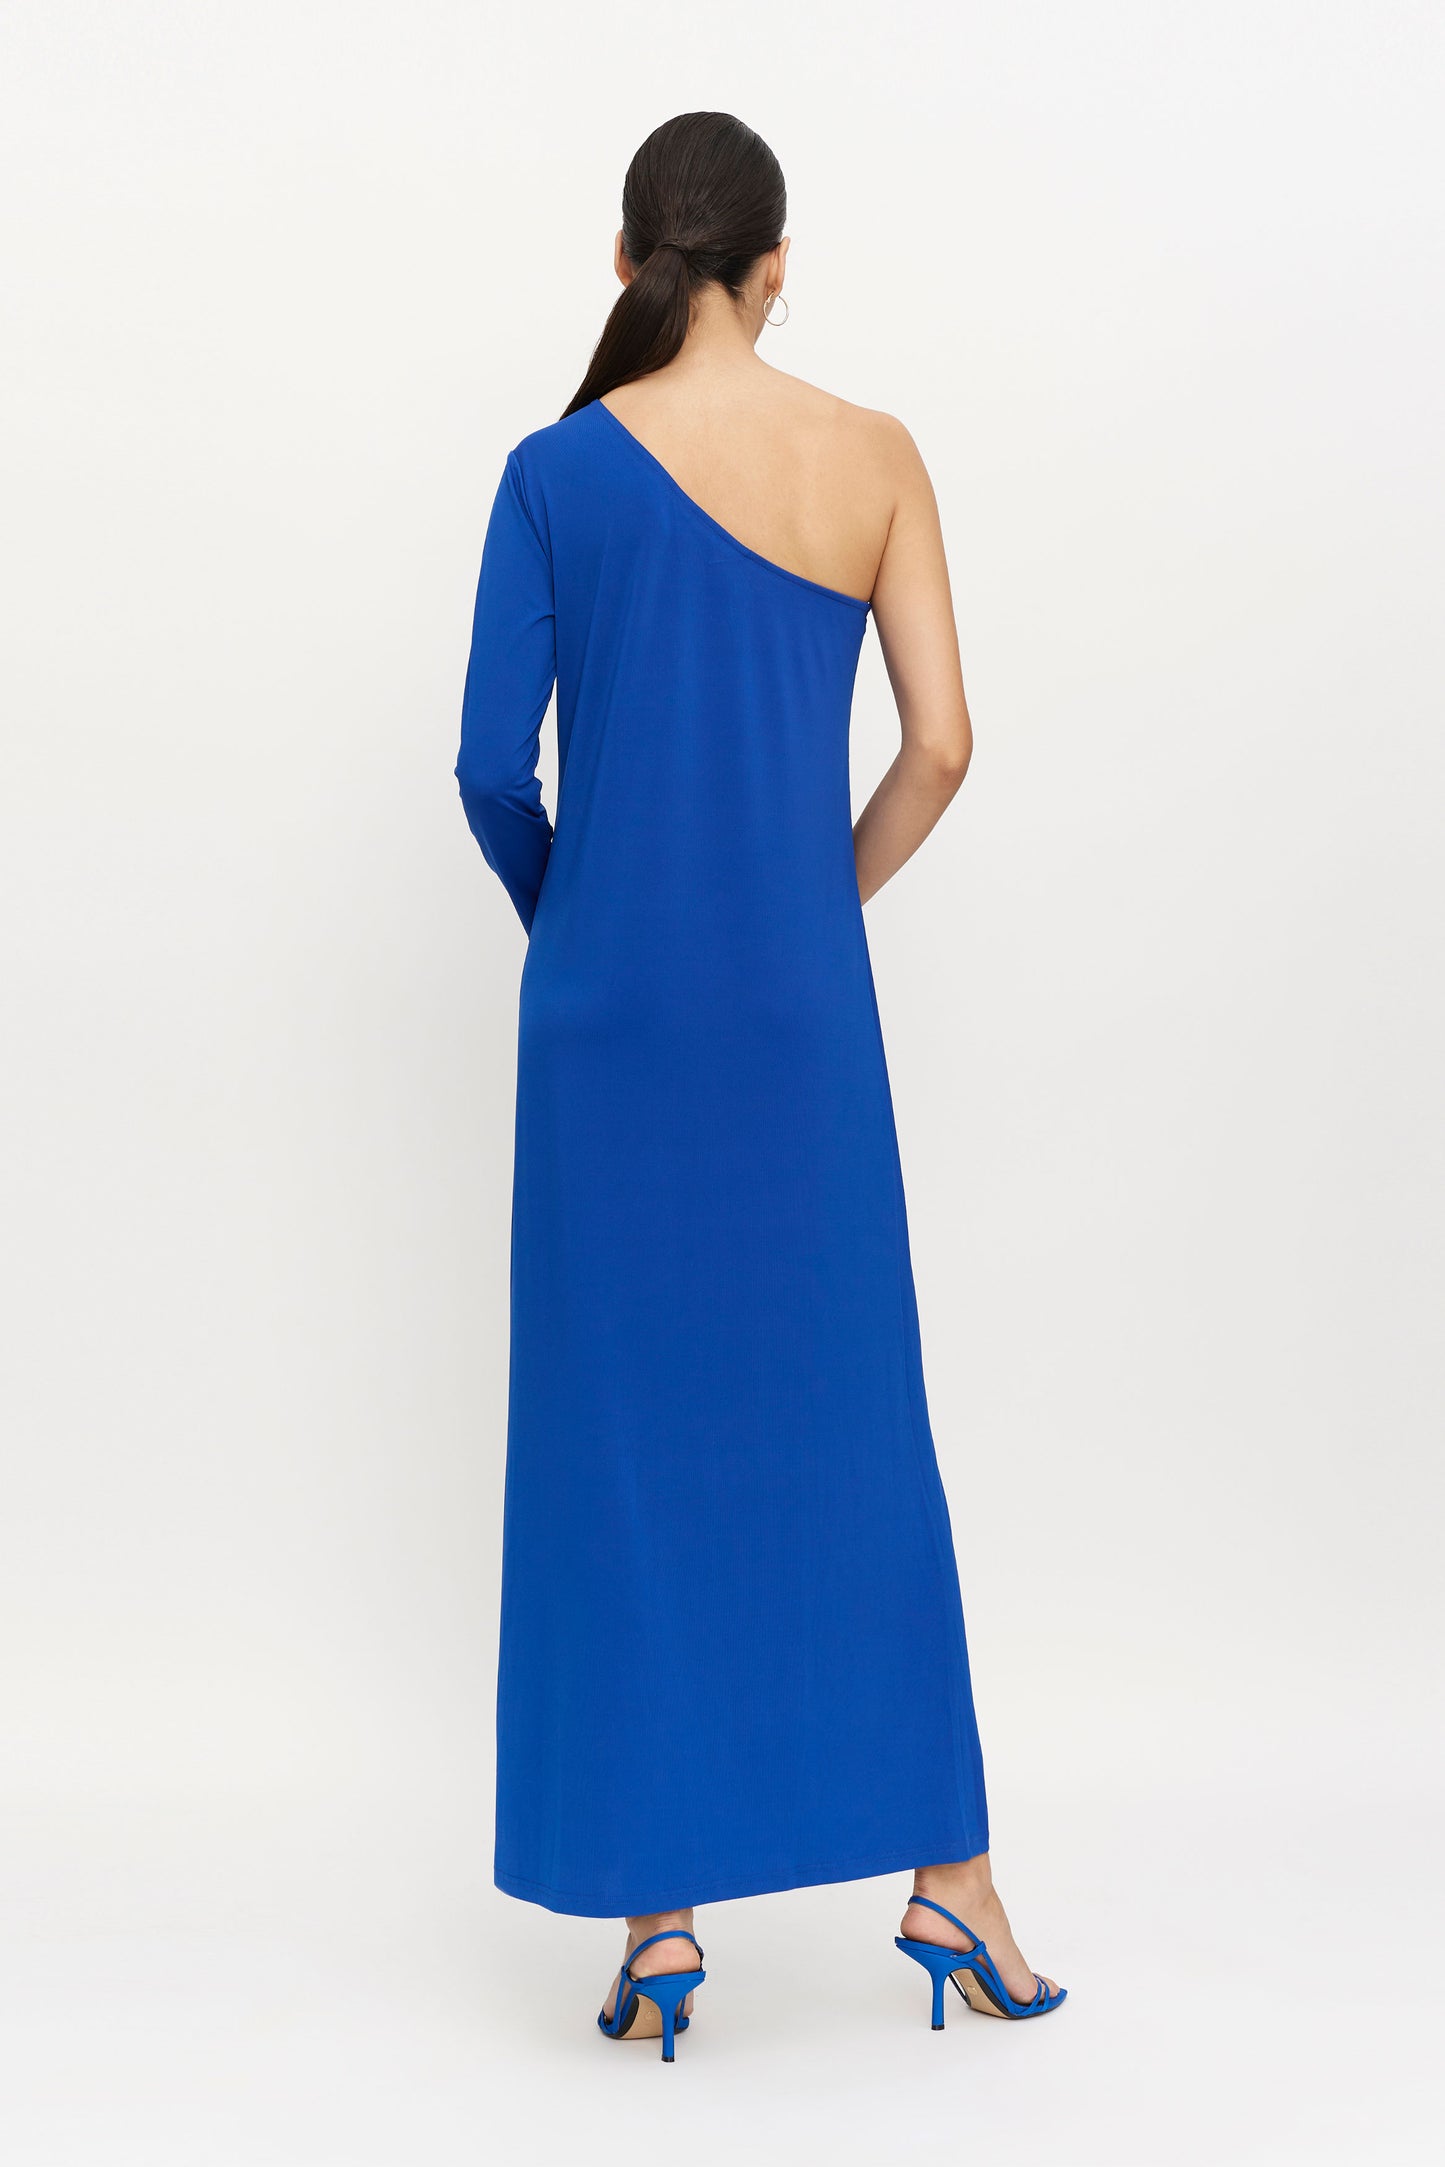 Blue asymmetrical long dress